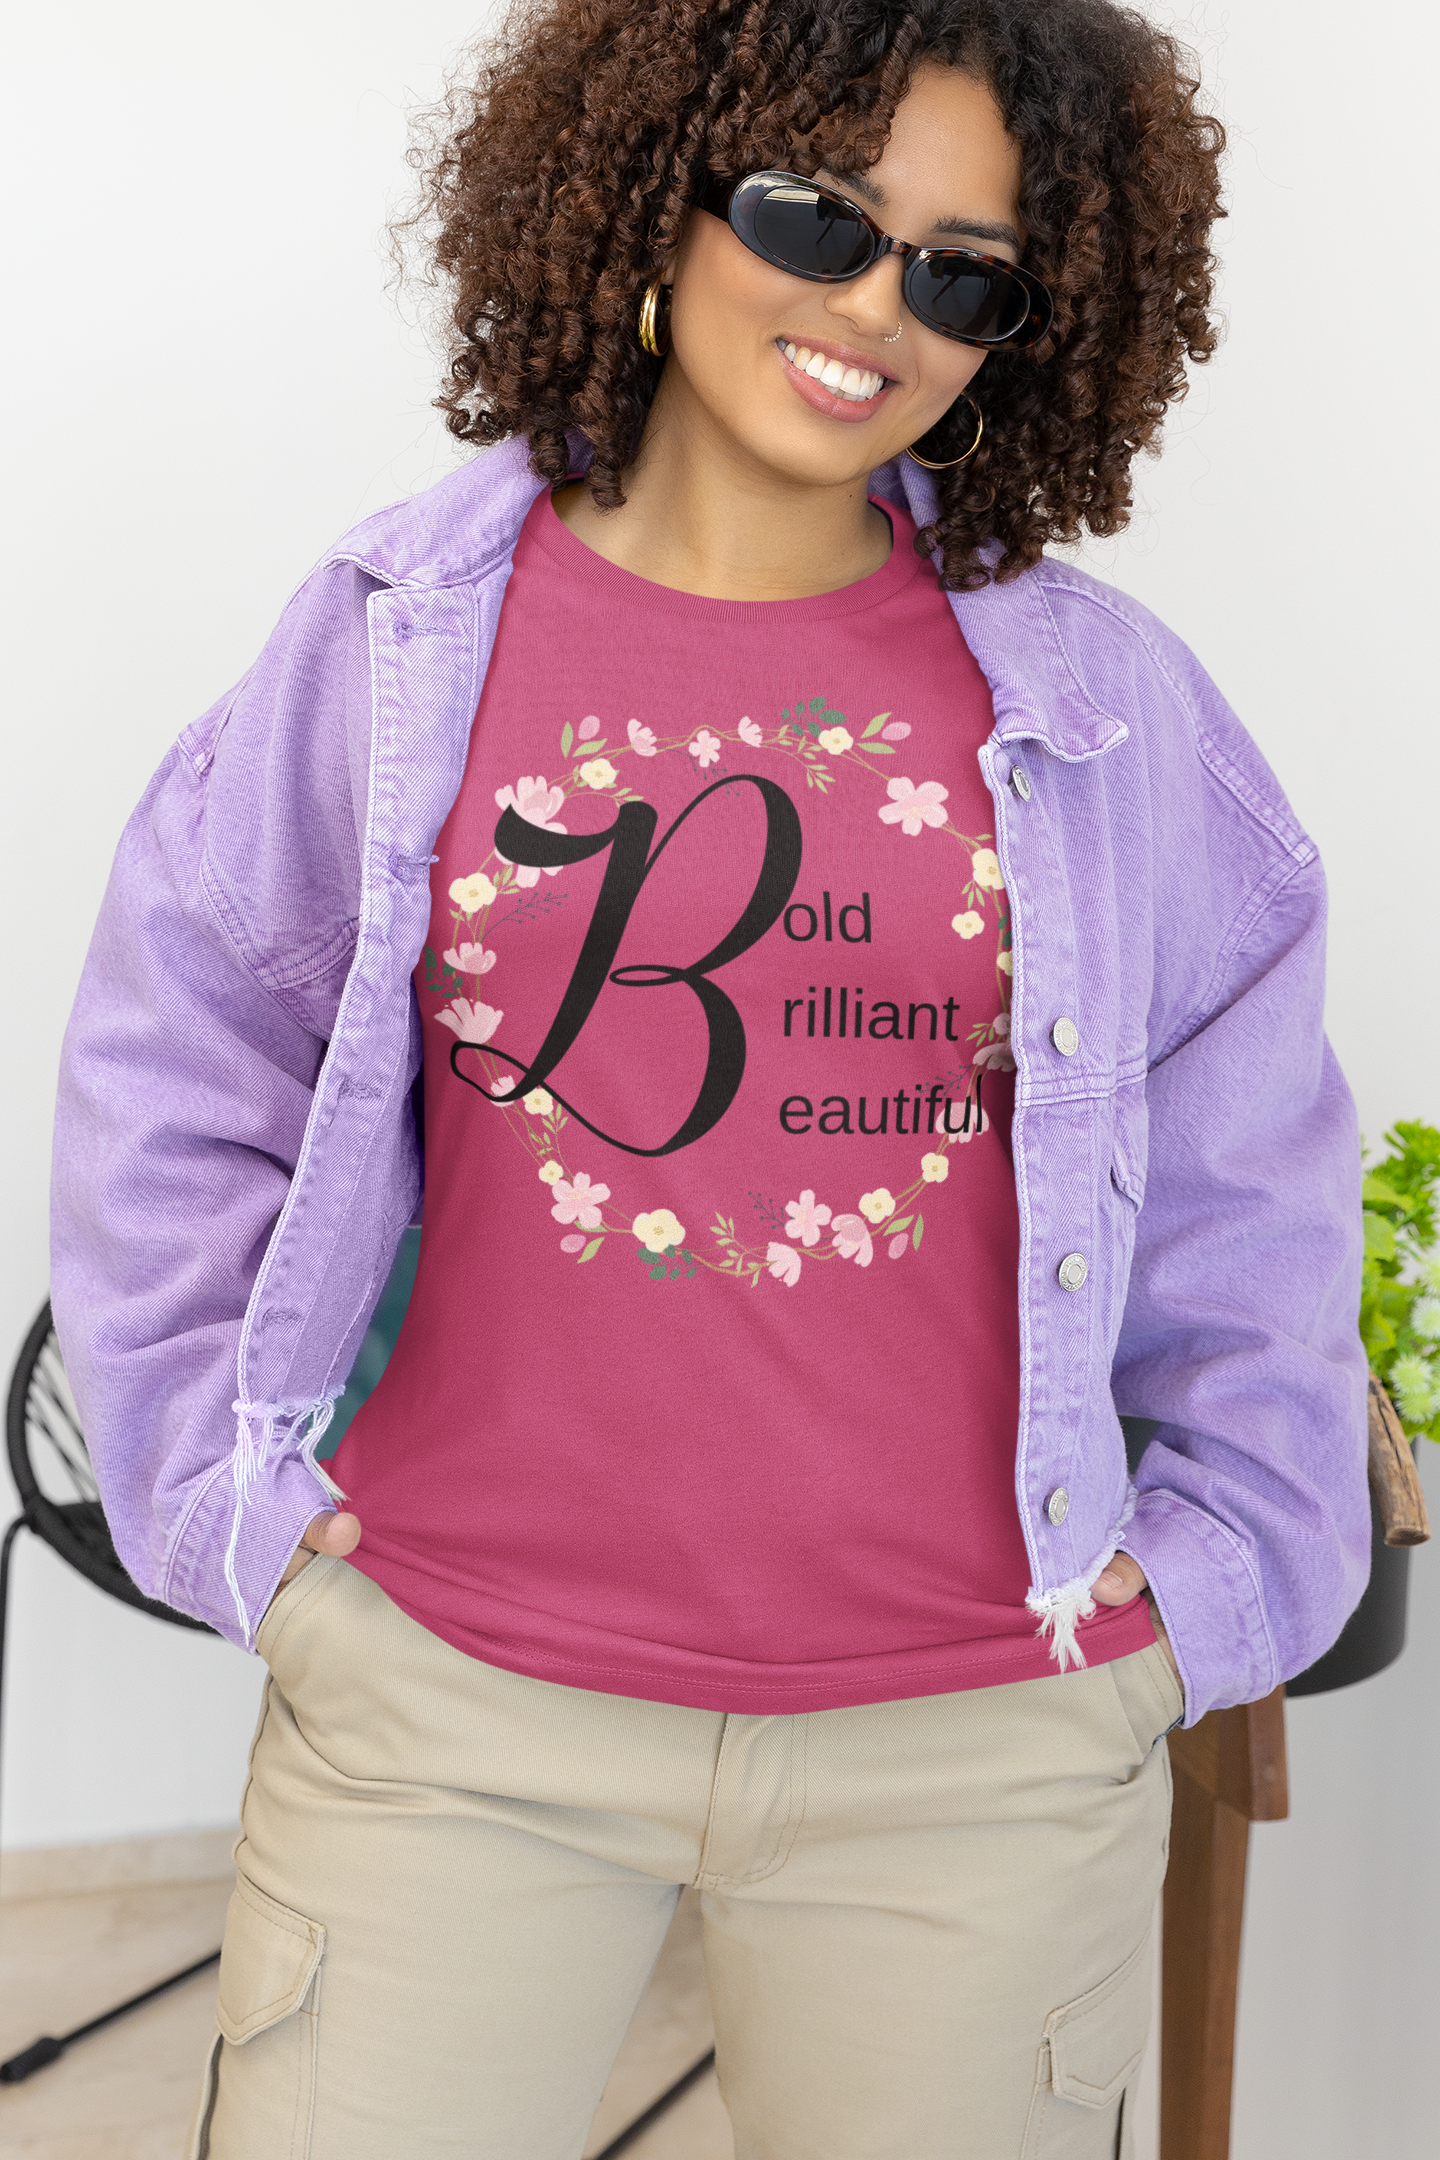 Bold Brilliant Beautiful Motivational T-Shirt - Unisex - Motivational Treats